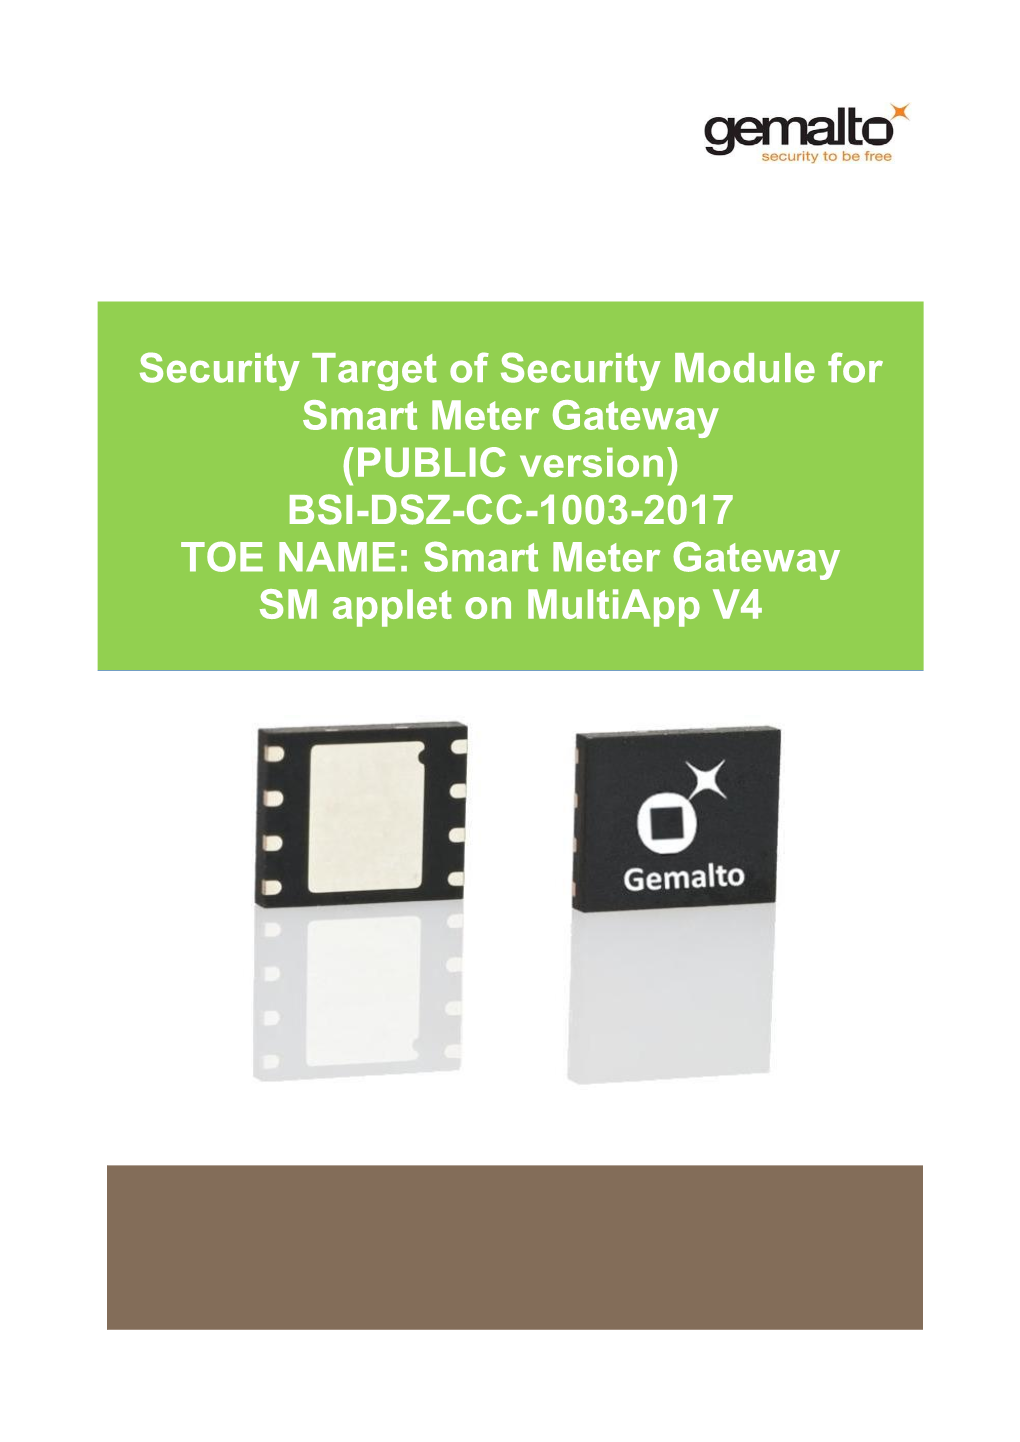 Security Target of Security Module for Smart Meter Gateway (PUBLIC Version) BSI-DSZ-CC-1003-2017 TOE NAME: Smart Meter Gateway SM Applet on Multiapp V4